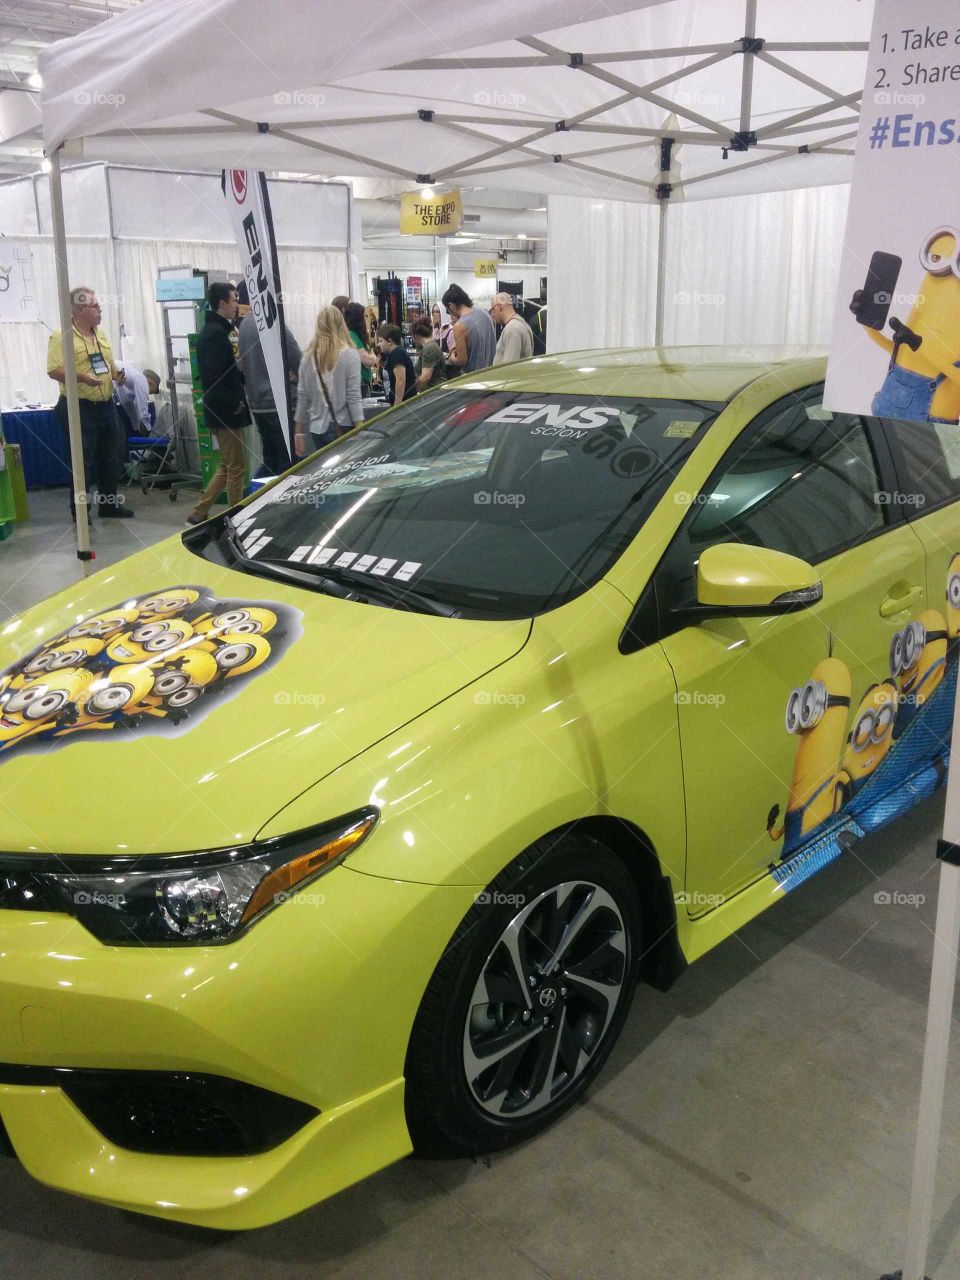 Comic Expo Minions car